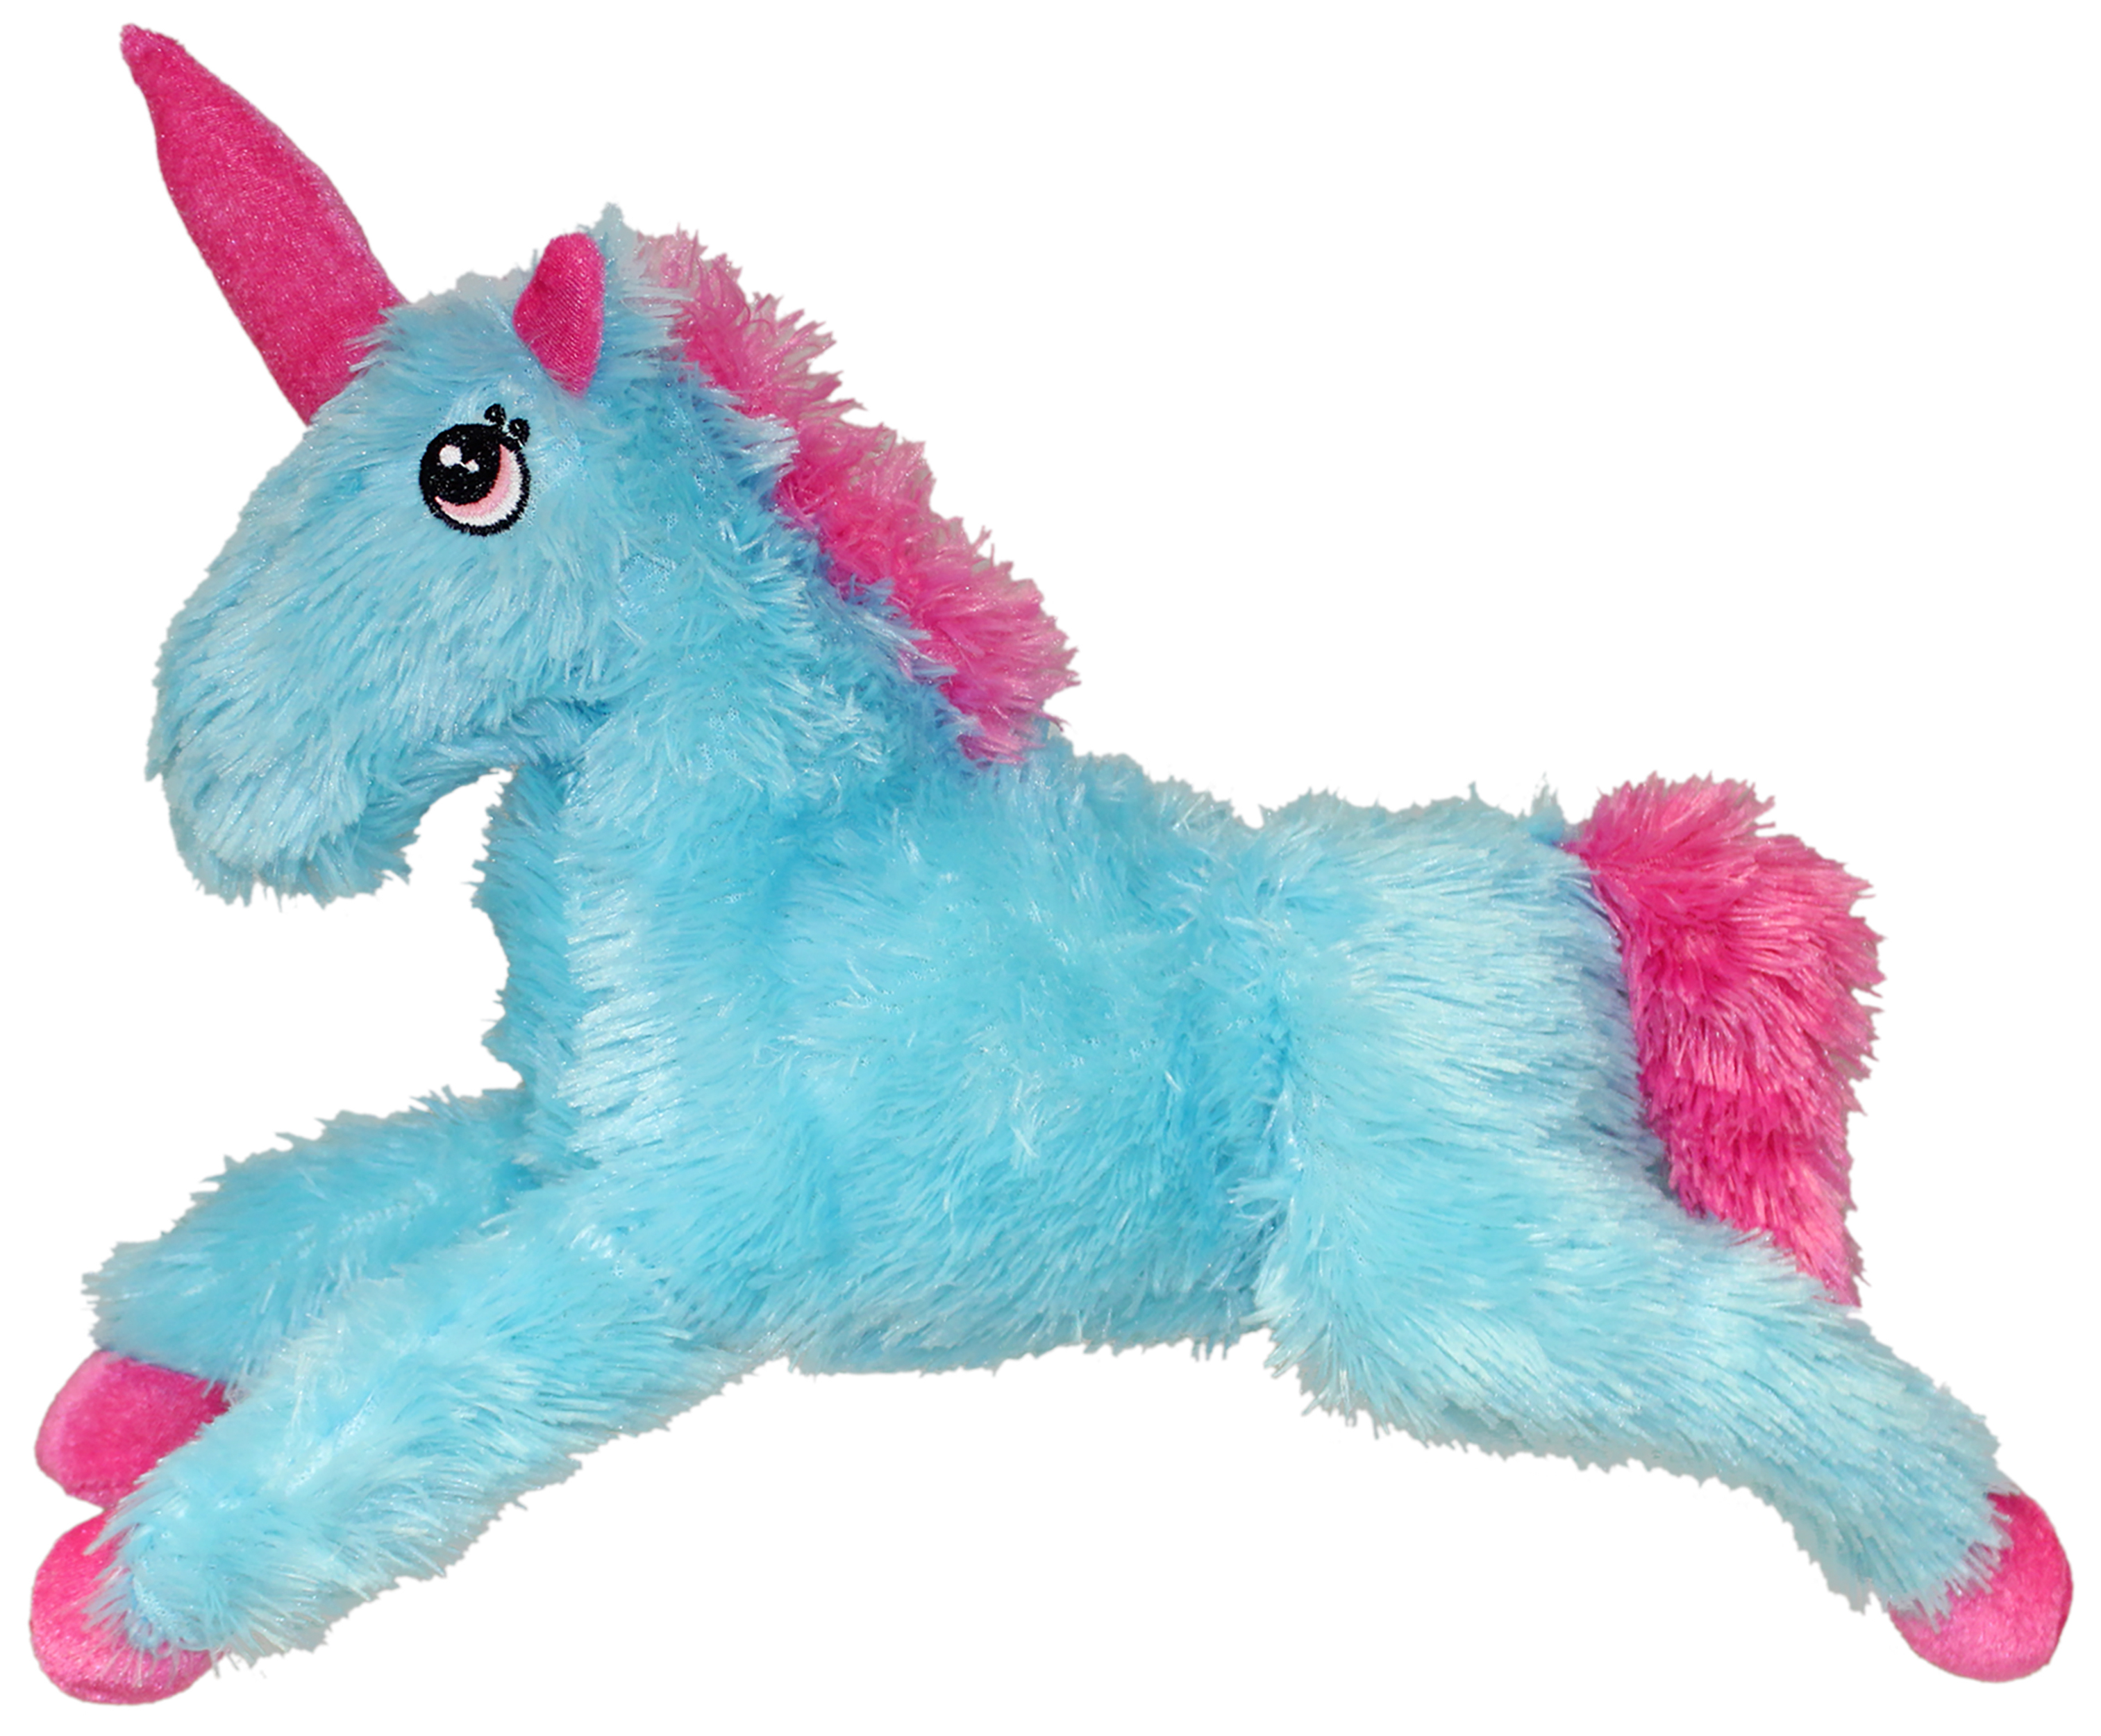 Whimsy & Charm Valentine's Day Sweatheart Love 22" Unicorn Stuffed Animal Plush Toy Soft & Fluffy - Blue - image 5 of 6